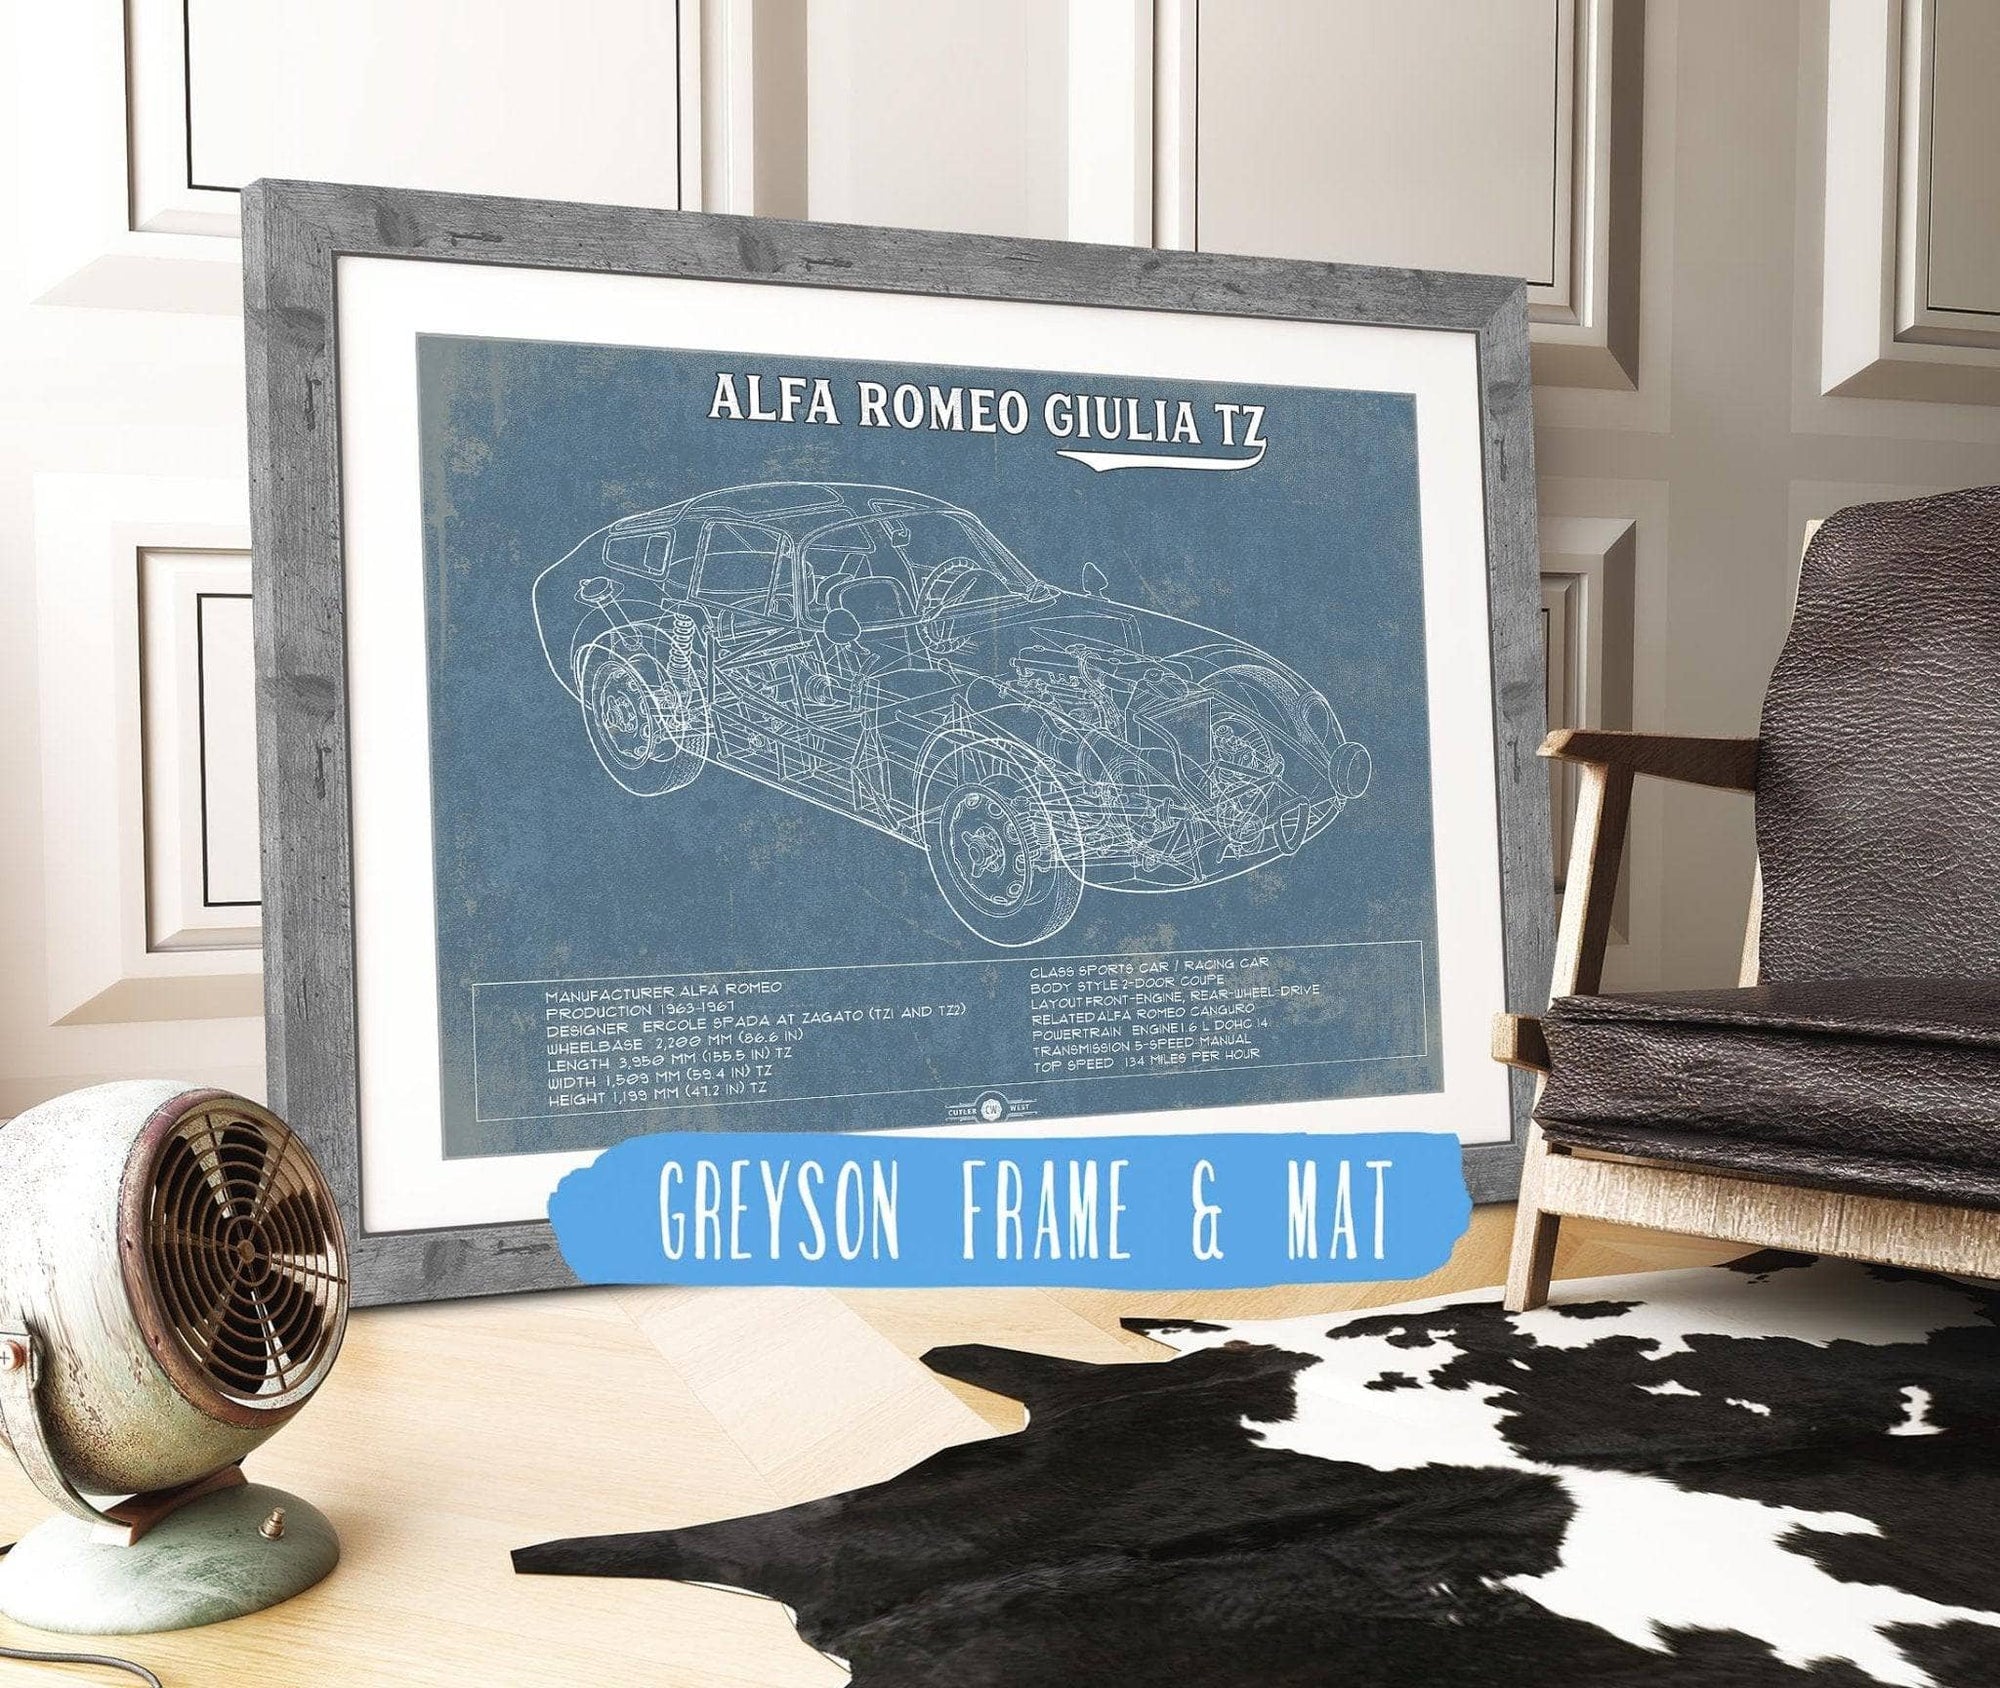 Cutler West Vintage  Alfa Romeo Giulia TZ Sports / Racing Car Print